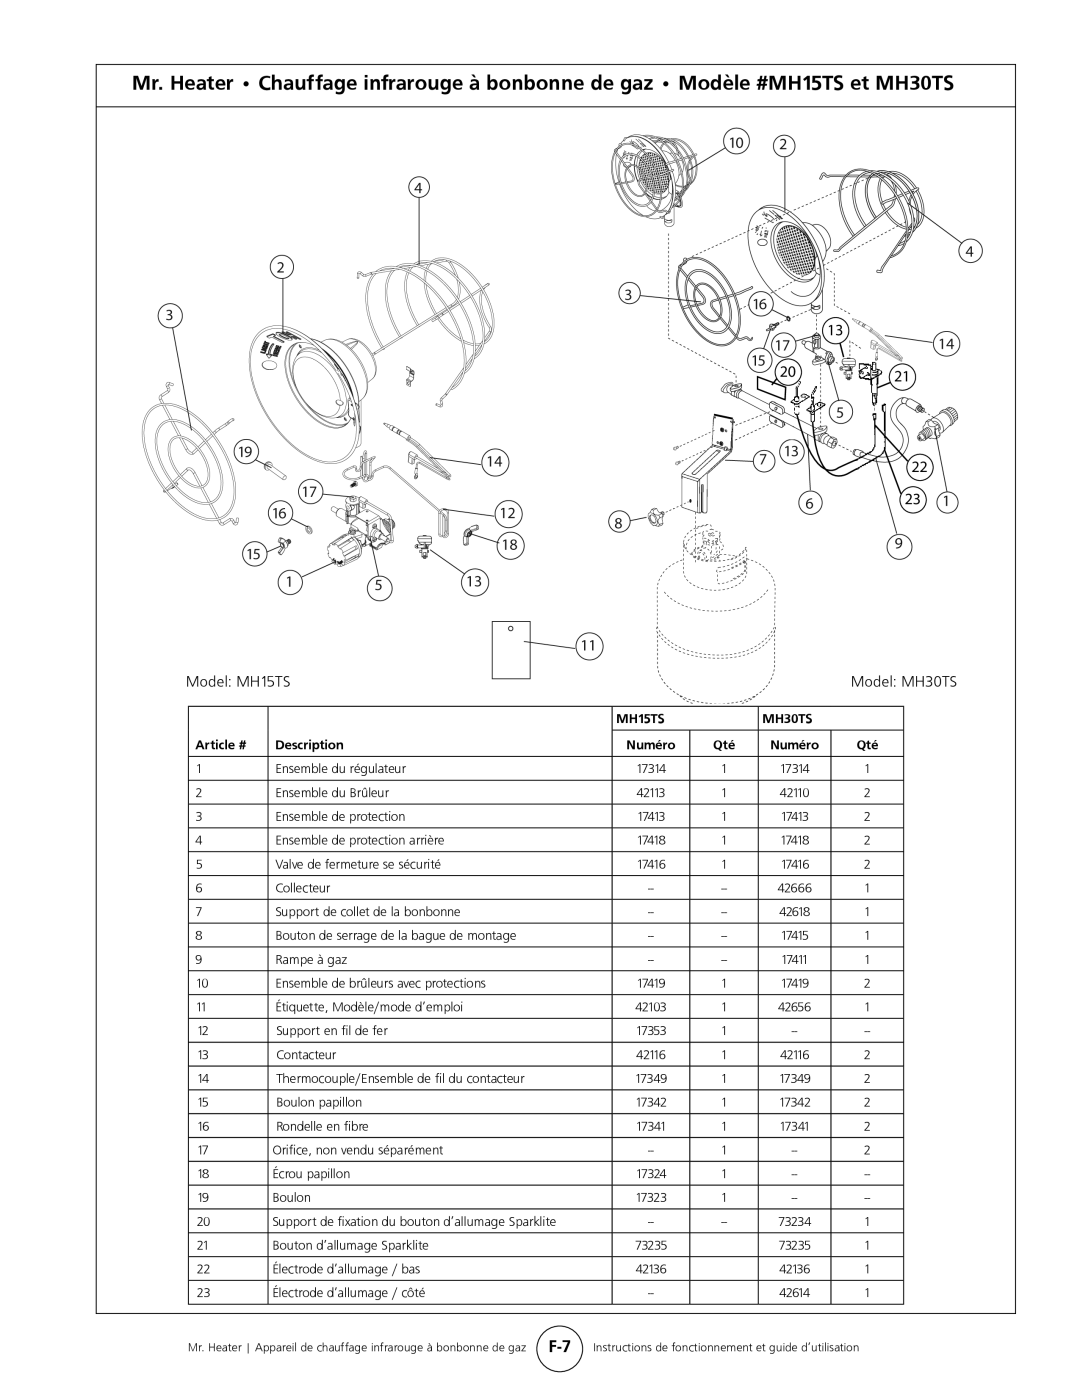 Mr. Heater MH15tS operating instructions MH15TS, MH30TS, Article #, Description, Numéro 